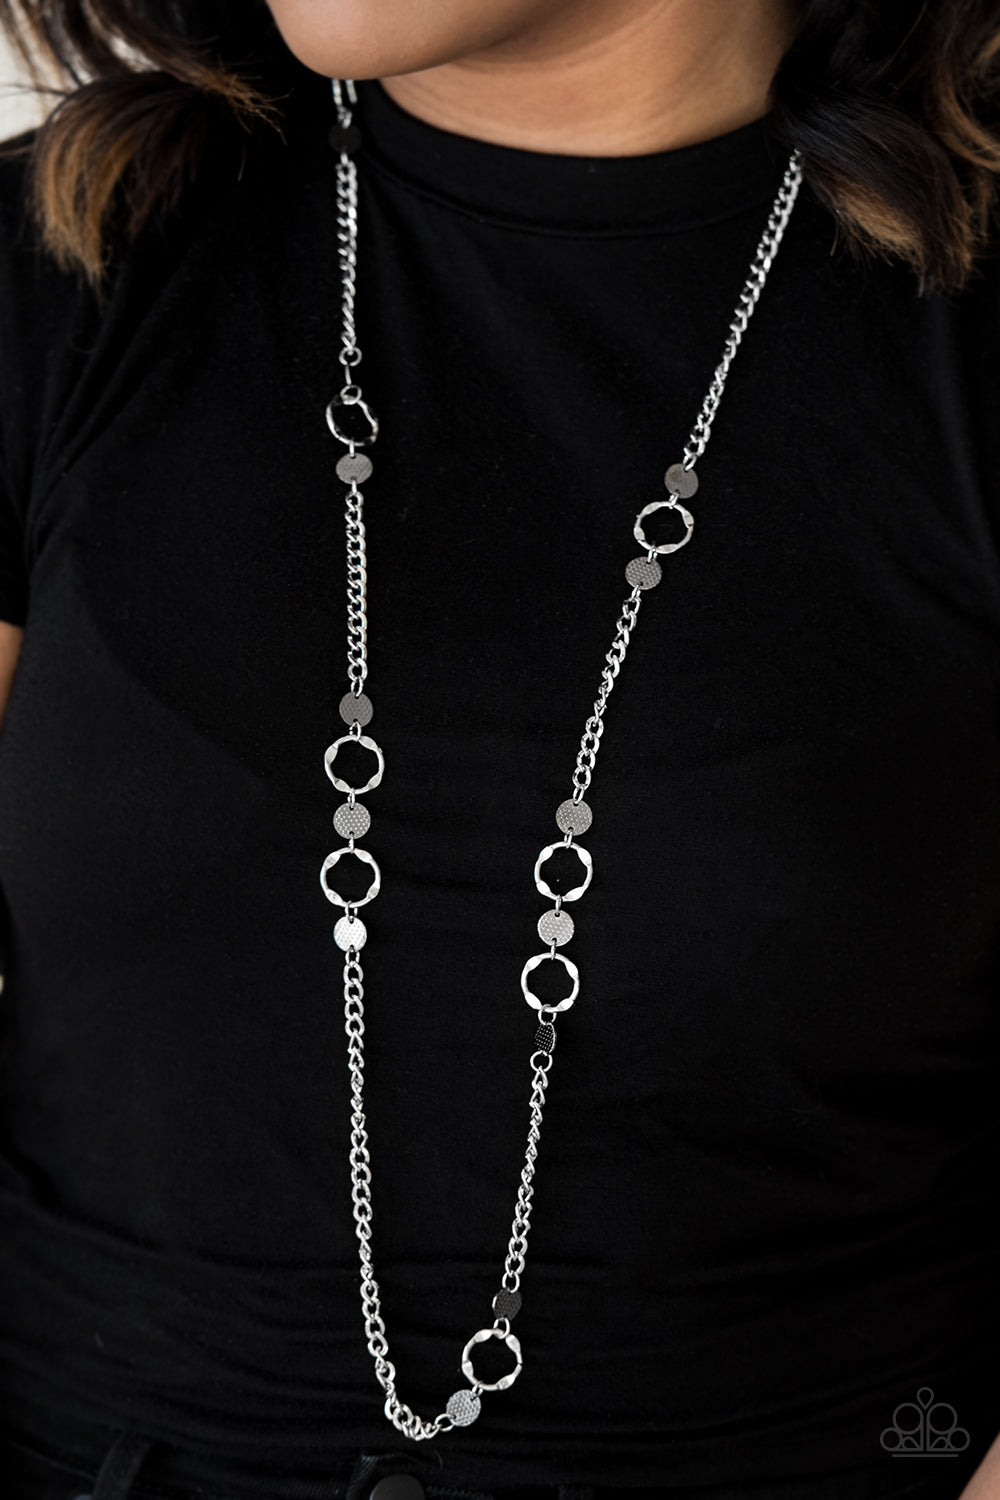 Stylishly Steampunk - Silver necklace